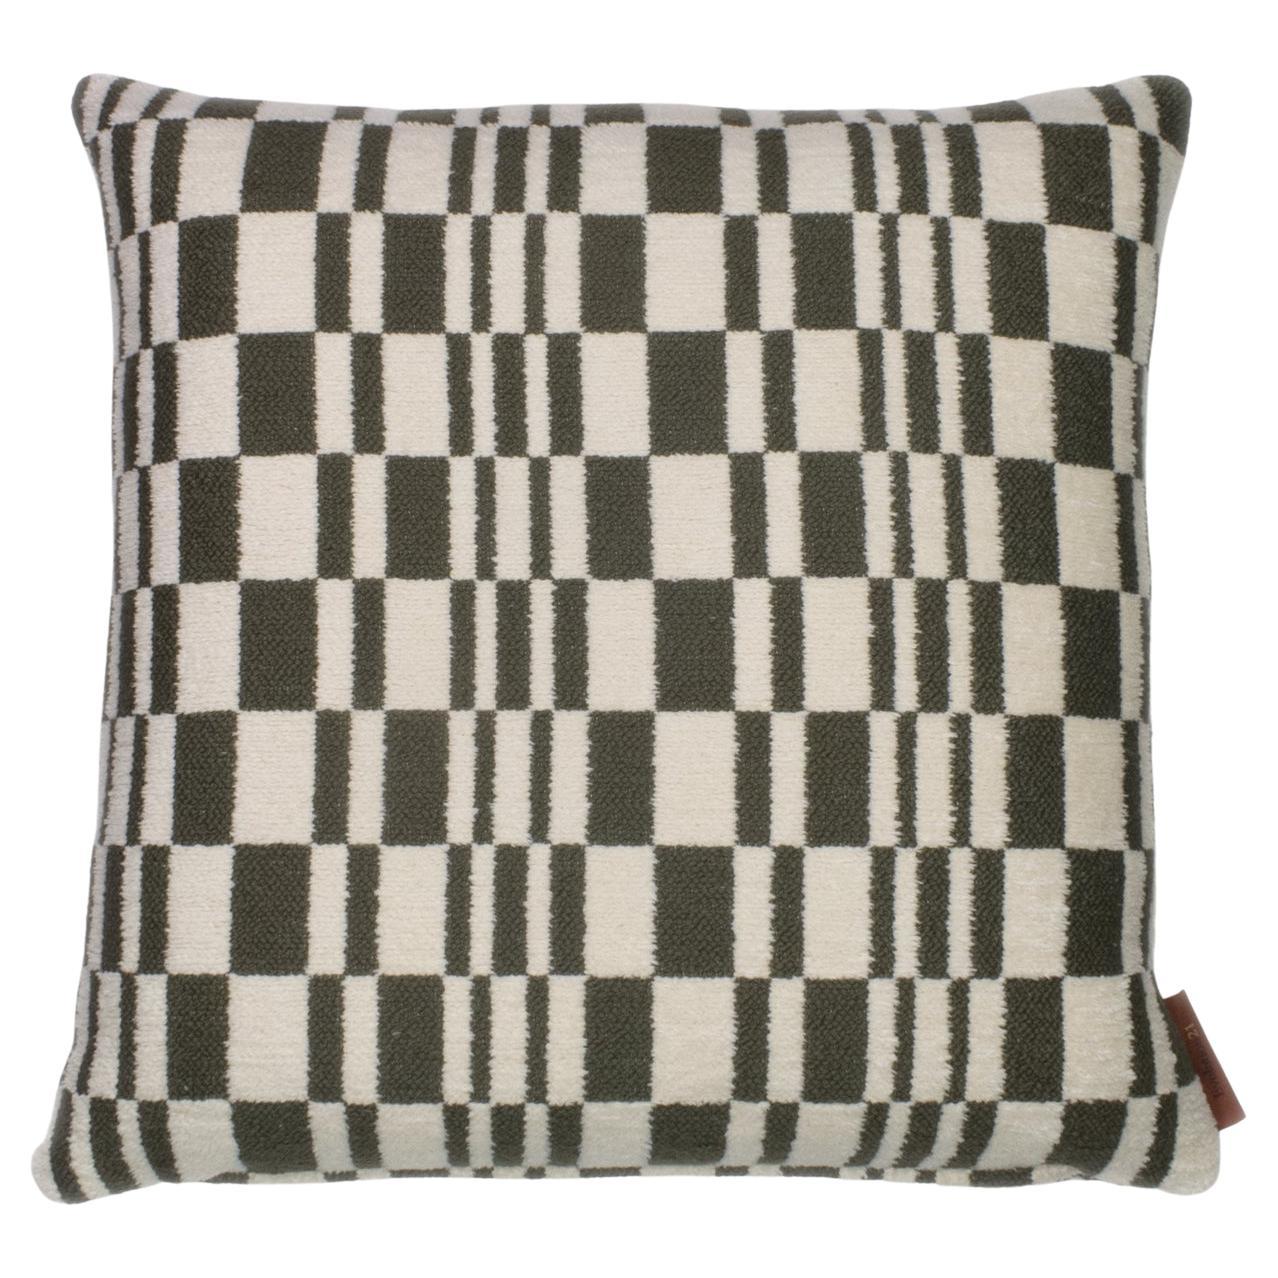 Cushion / Pillow Chess Khaki by Evolution21